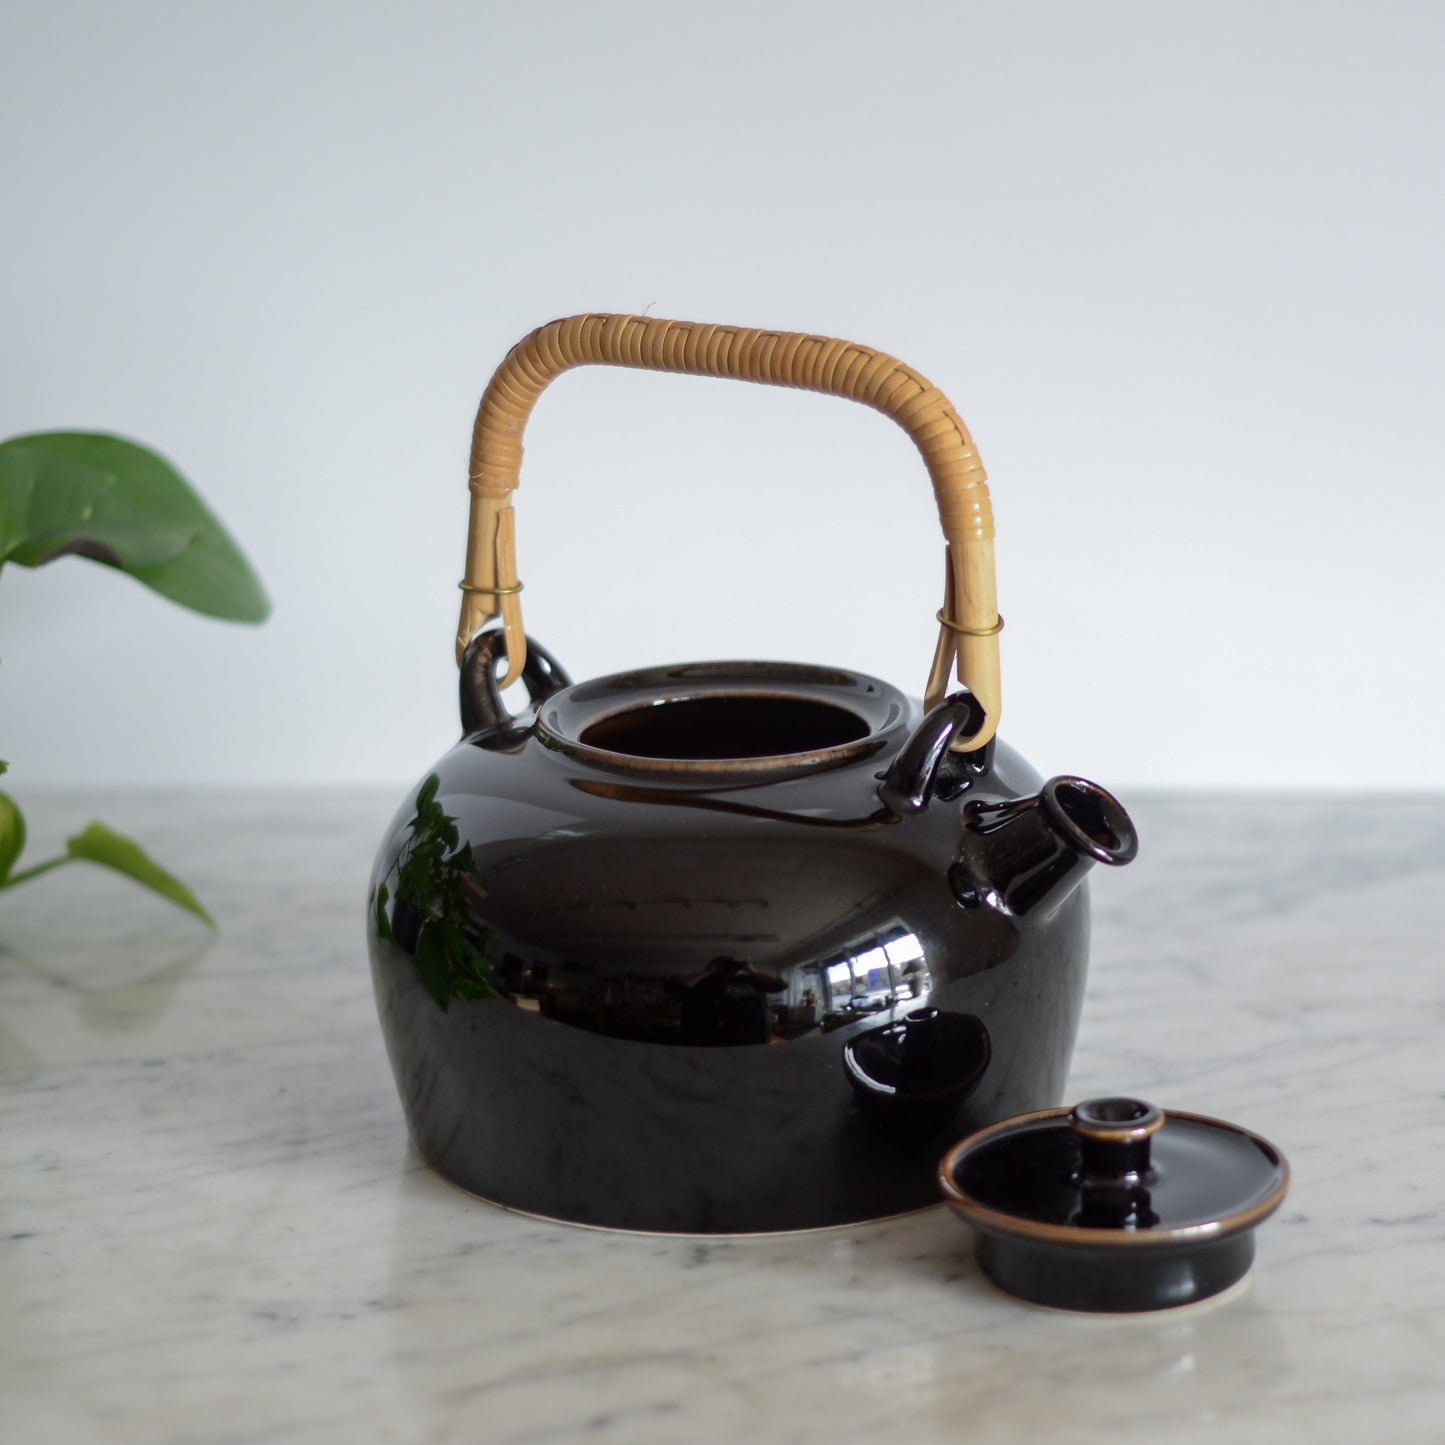 Vintage Black Ceramic Teapot by Dansk